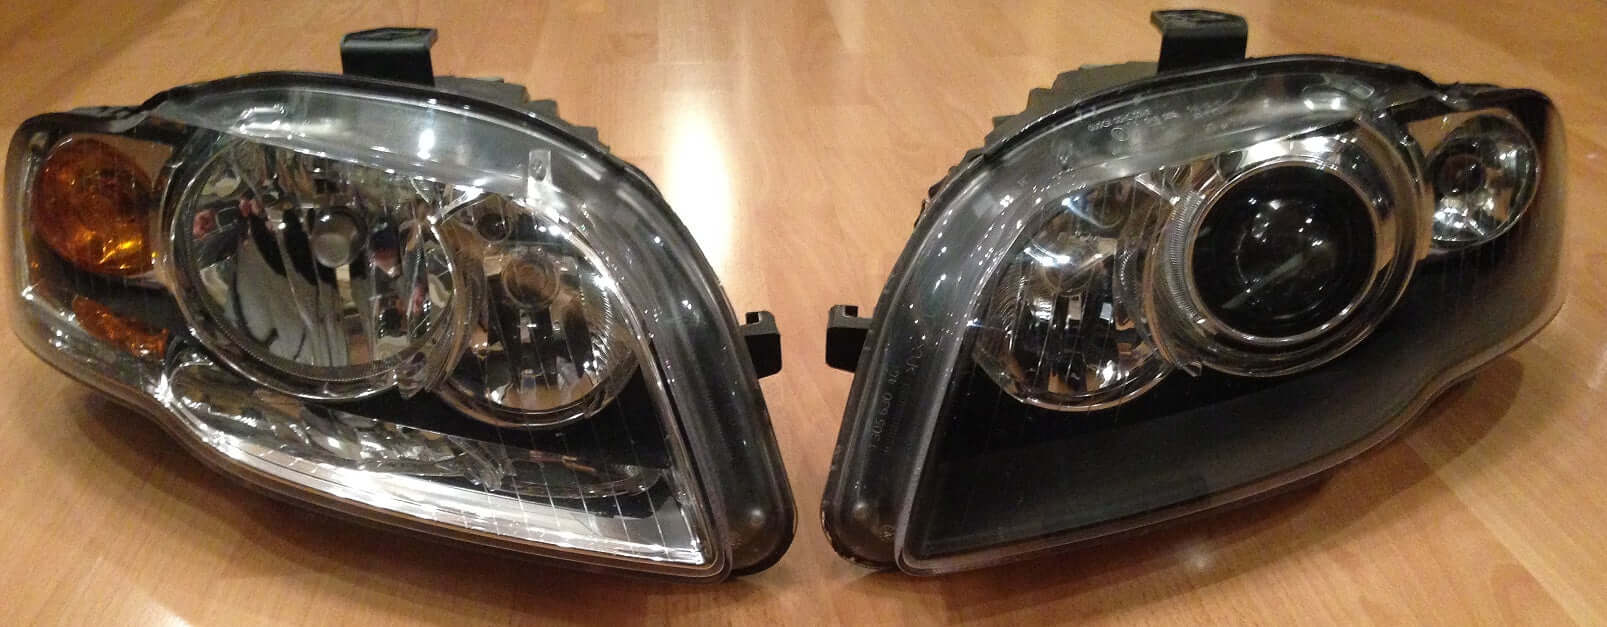 Audi A4 B7 HID bi-xenon headlight projector upgrade info tutorial